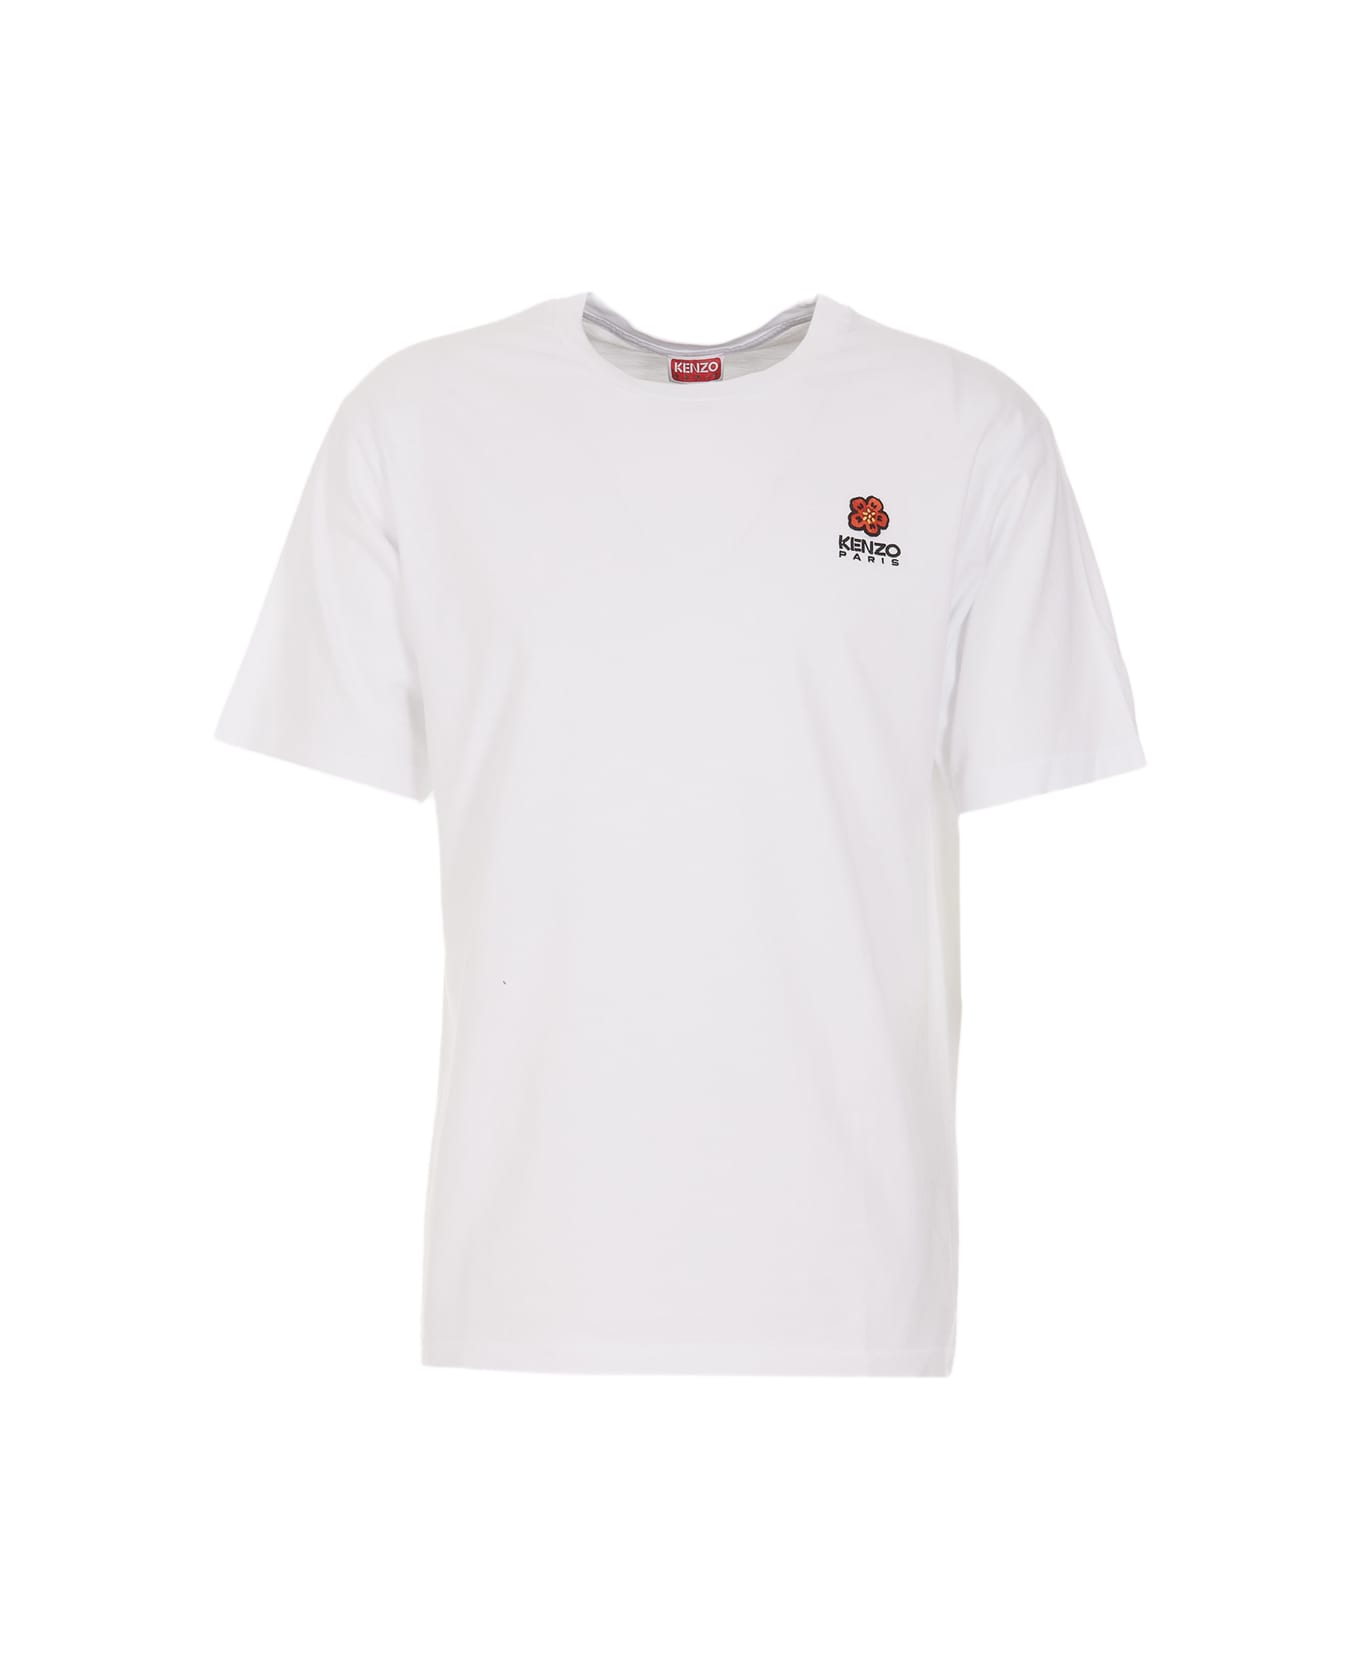 Kenzo White Cotton T-shirt - White